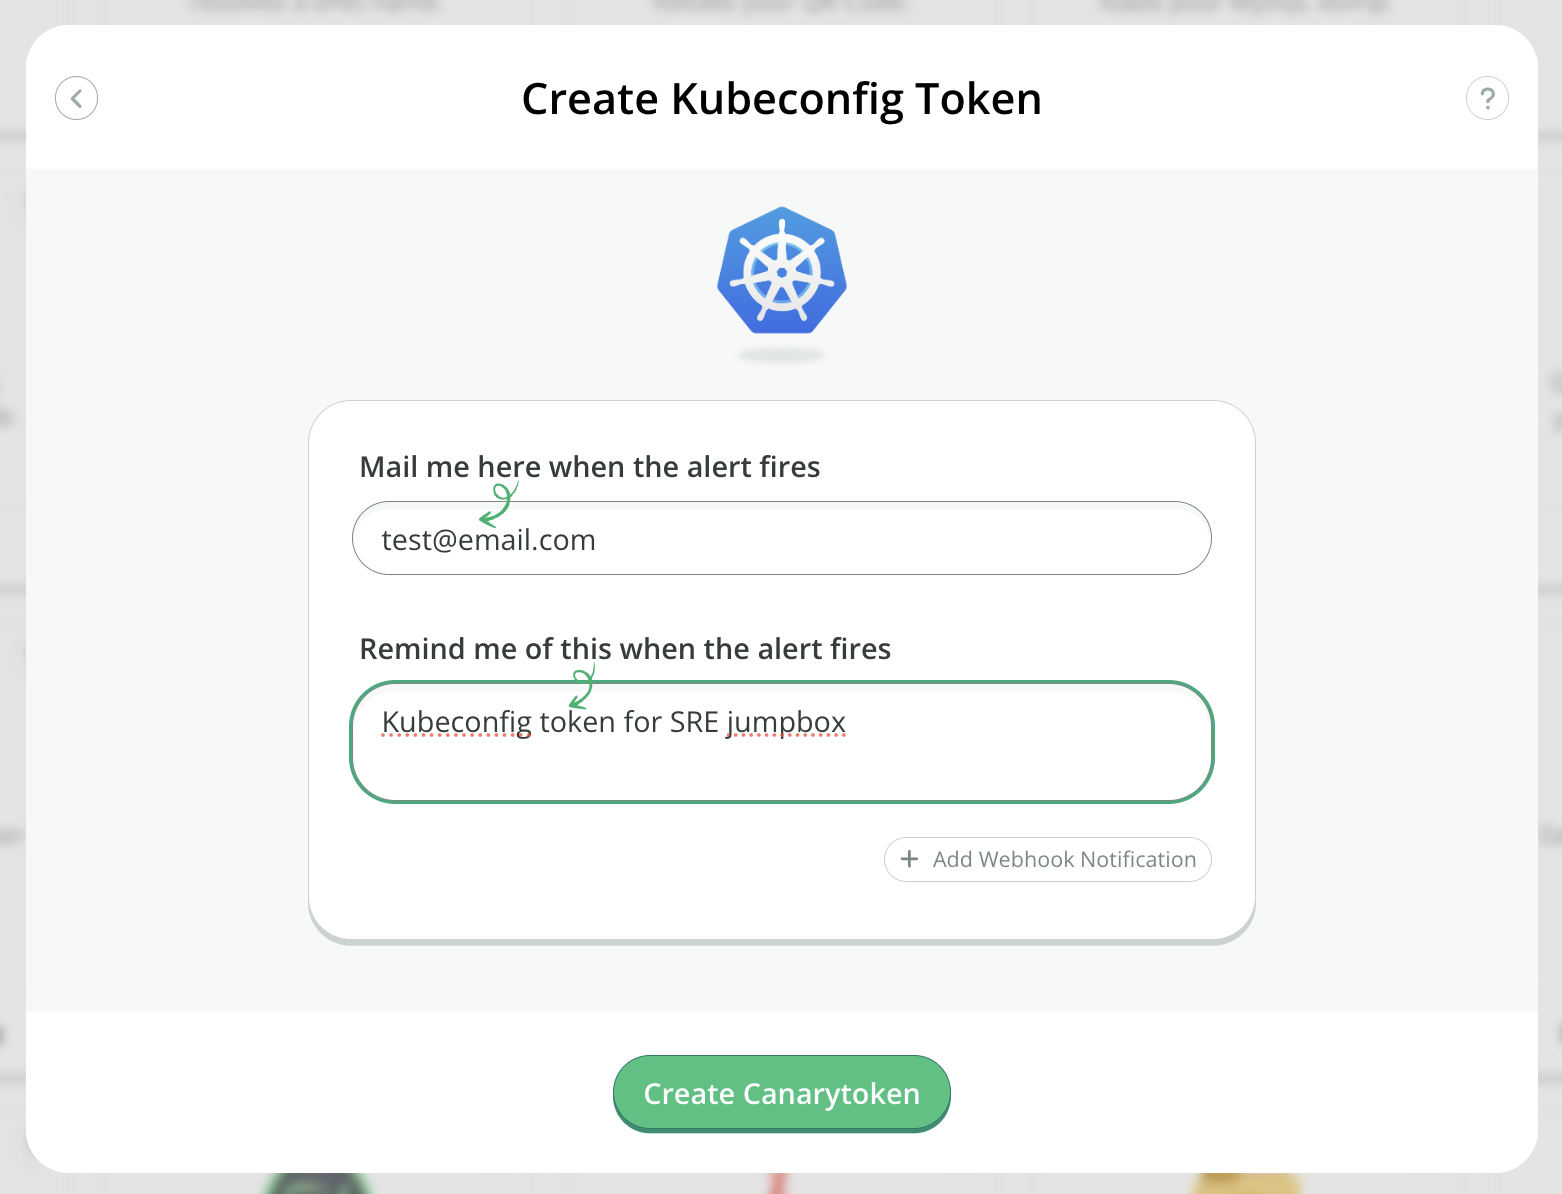 Creating a Kubeconfig token